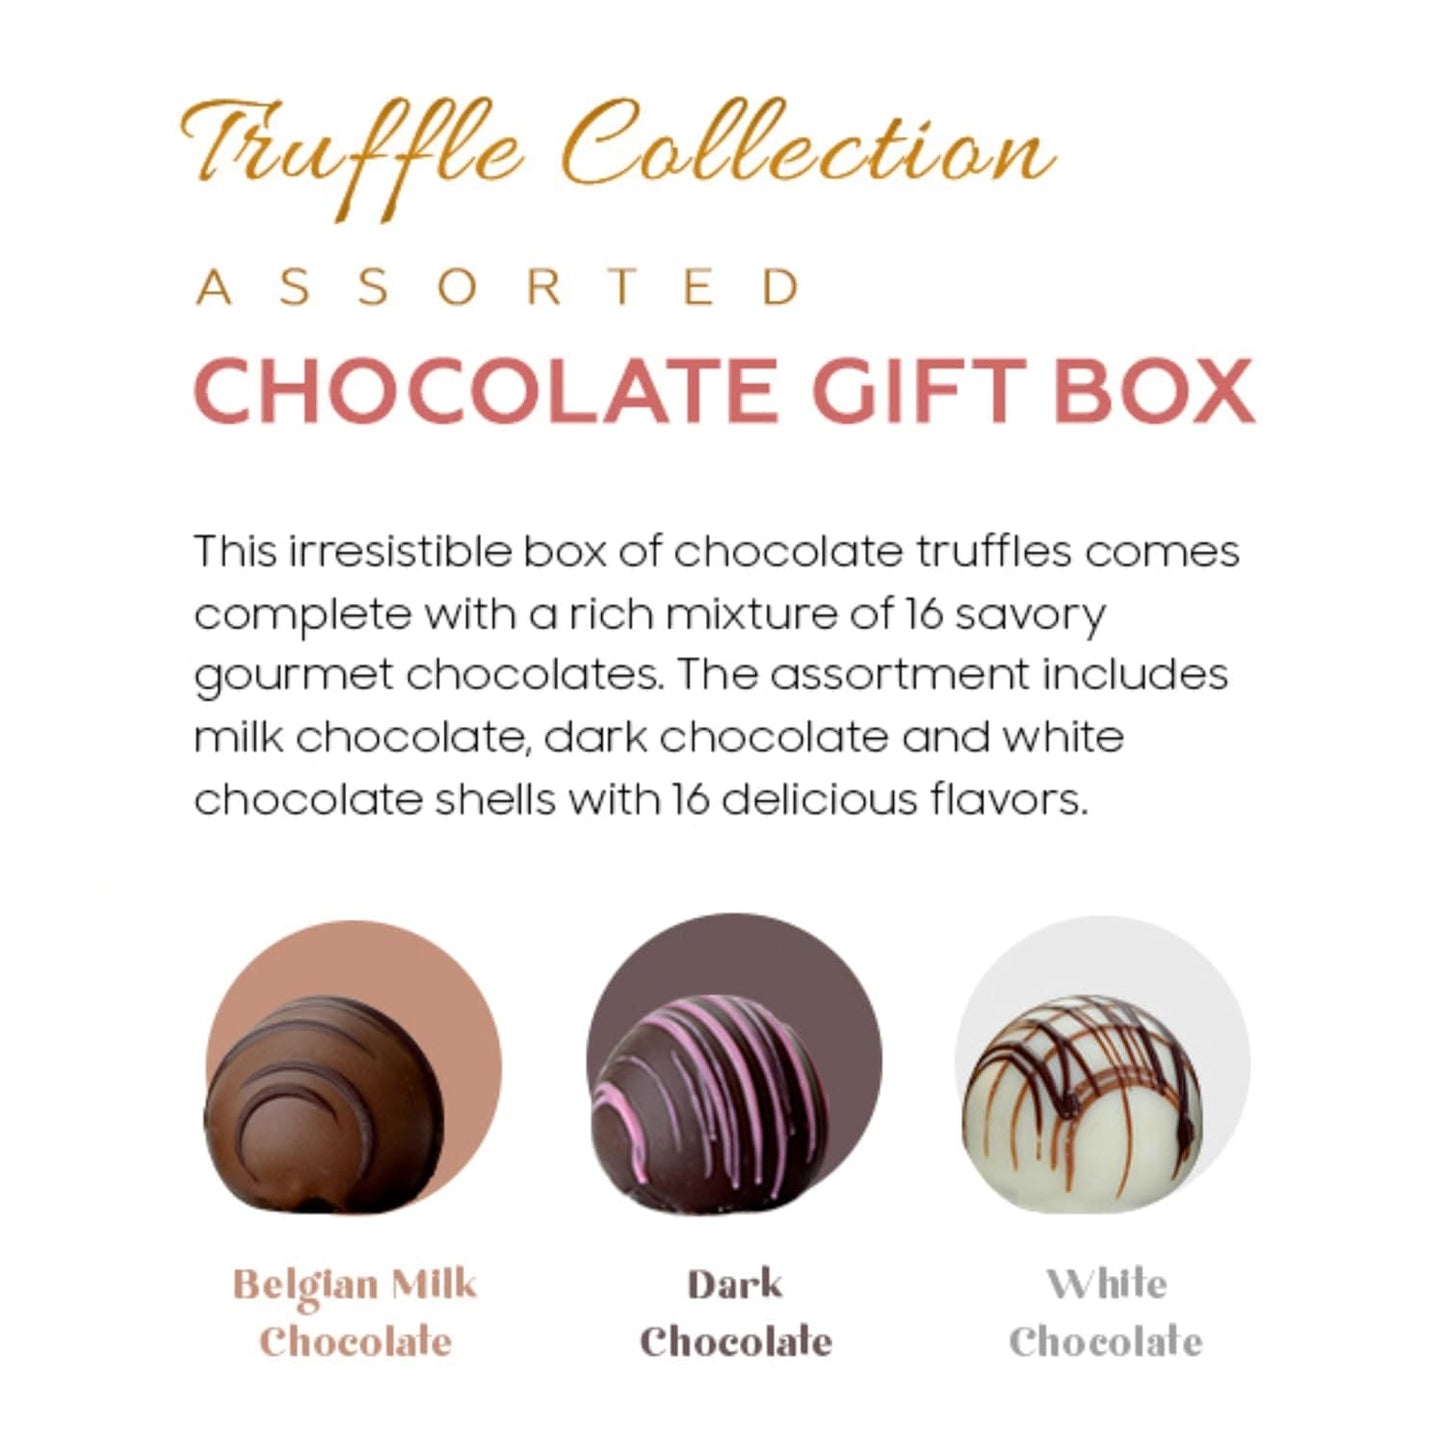 Chocolate Truffles Red Gift Box - Cravings by Zoe - Gourmet Chocolate